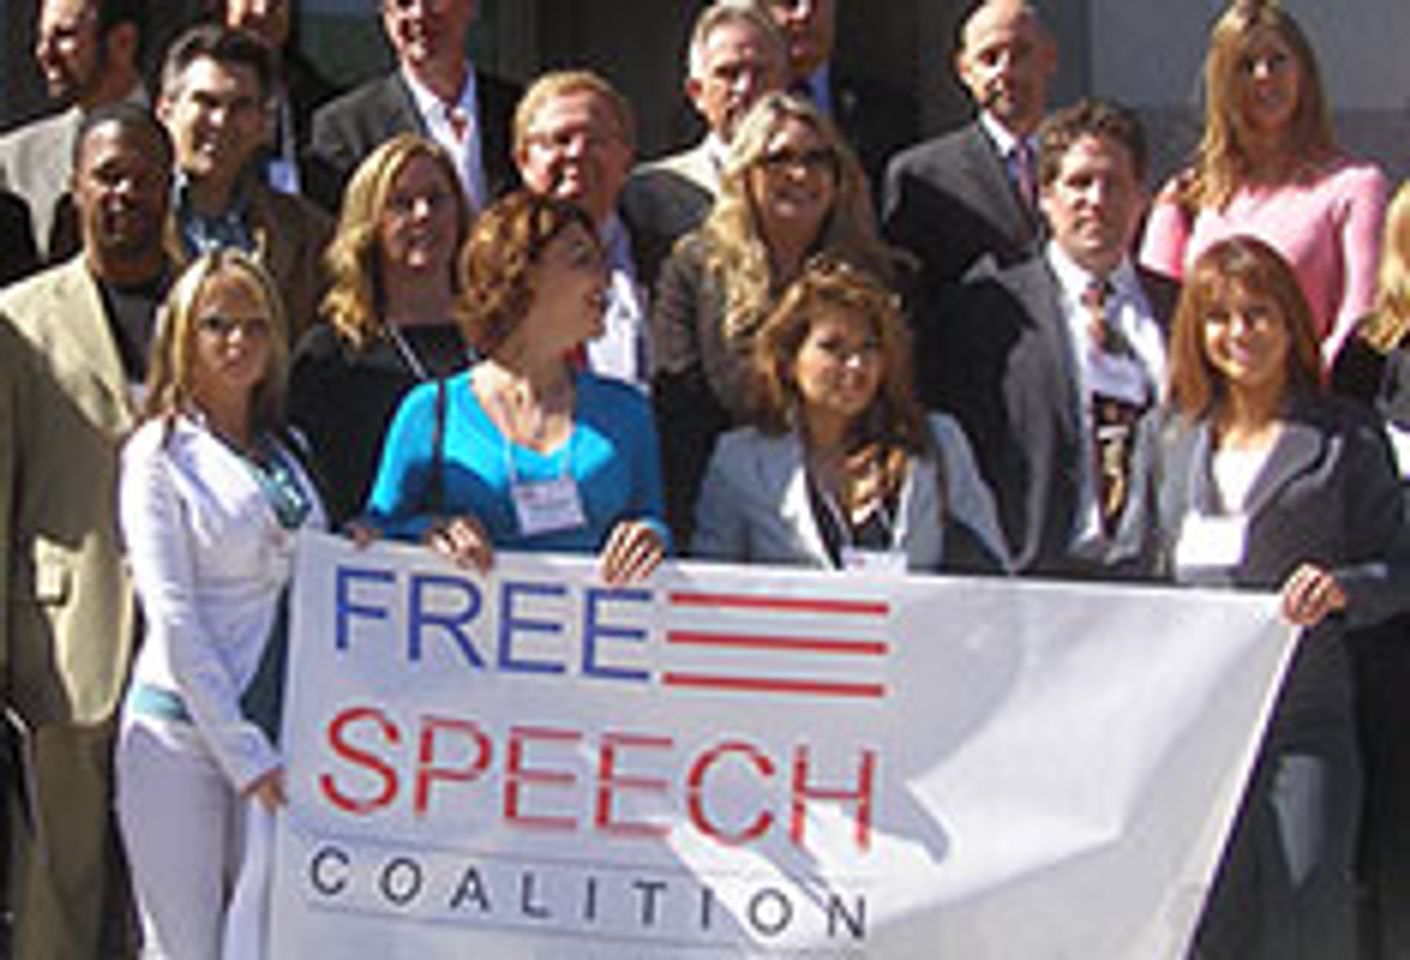 Free Speech Lobbying Days Still Going Strong After Ten Years